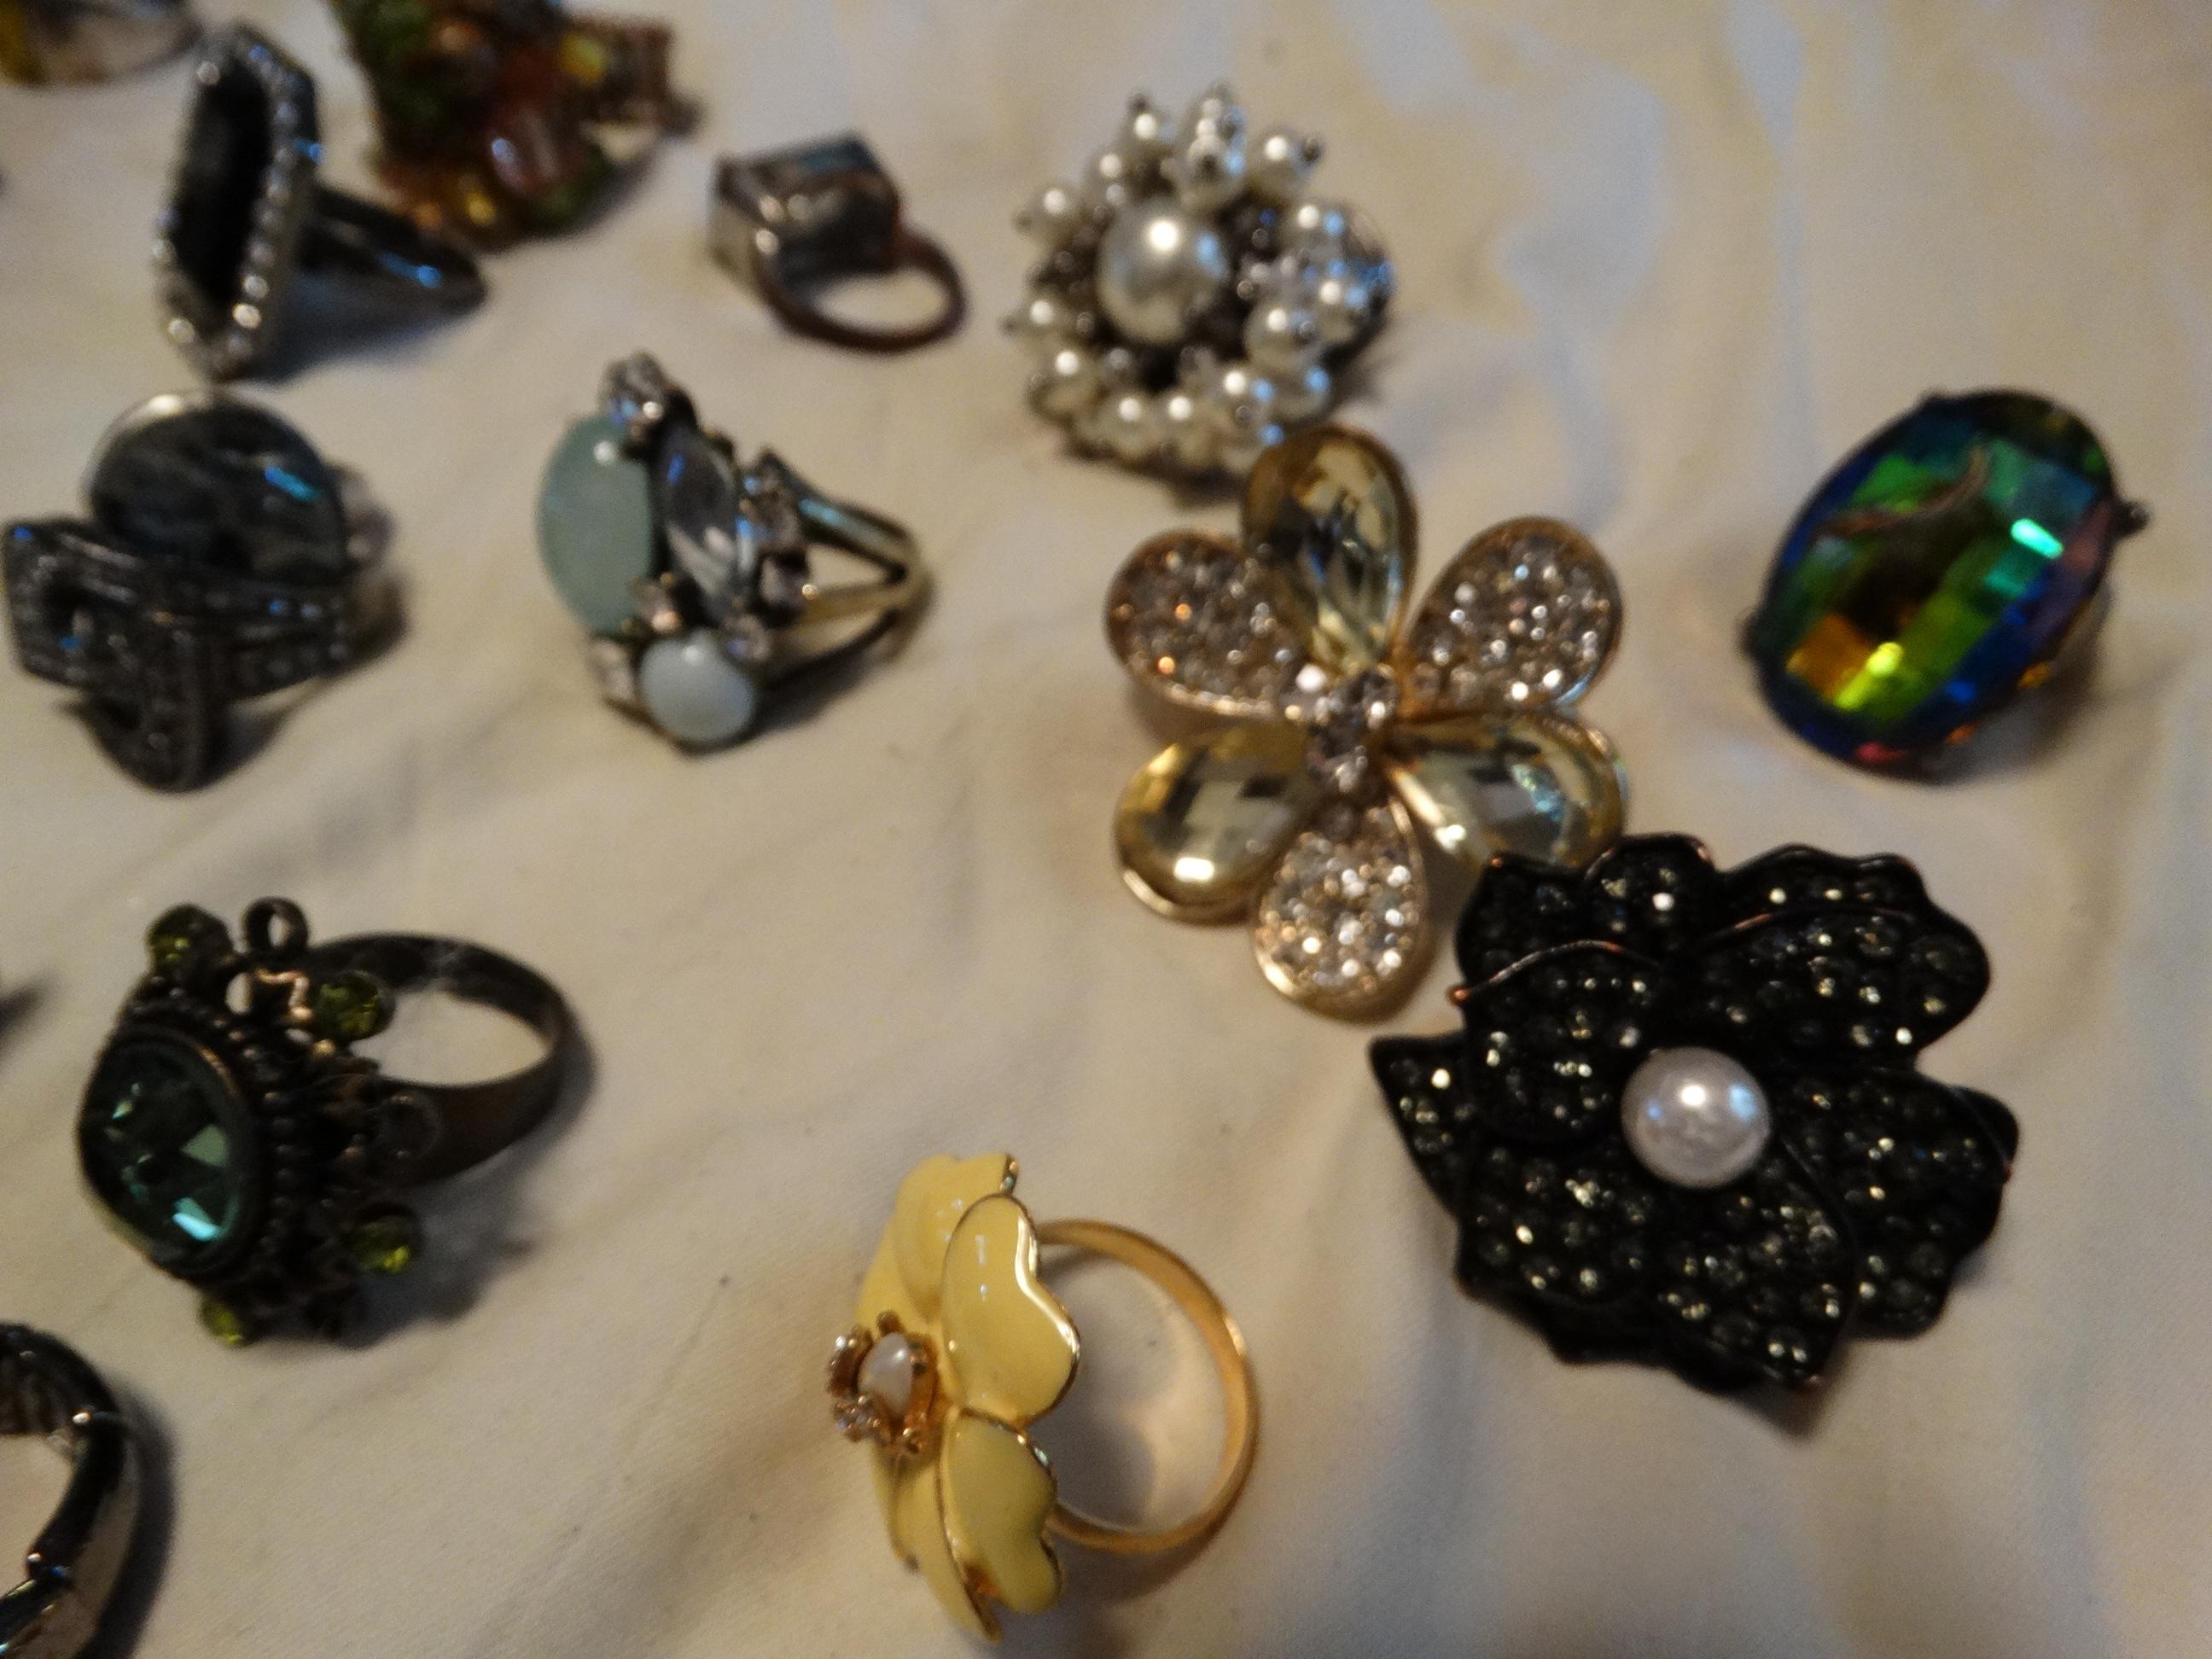 Costume Jewelry - Rings